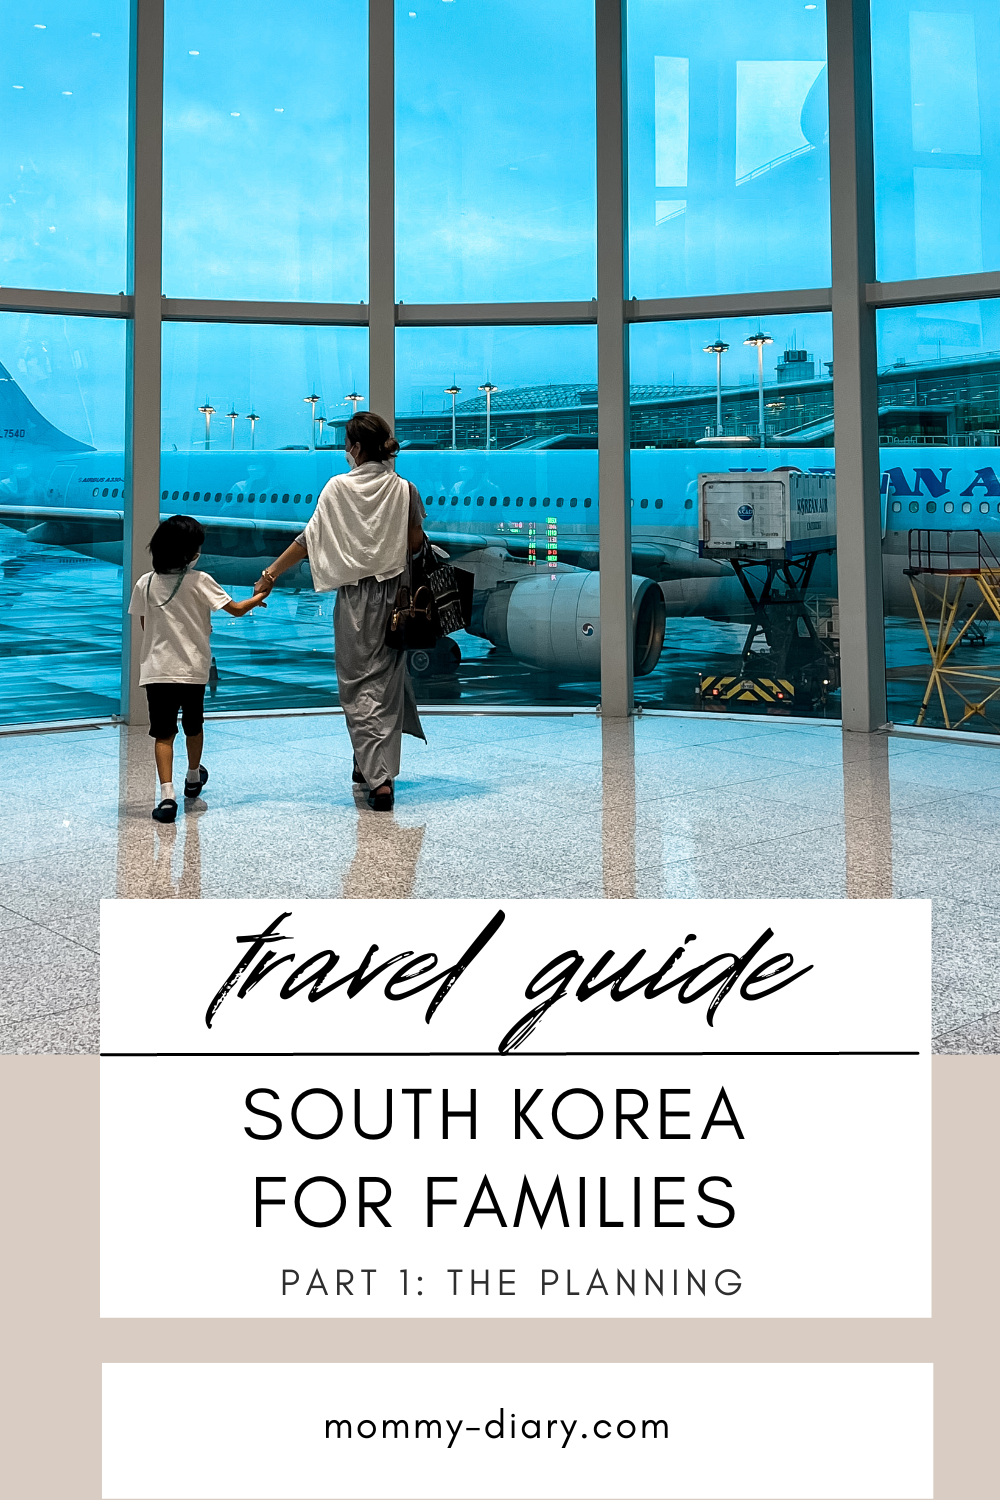 Best South Korea Travel Guide